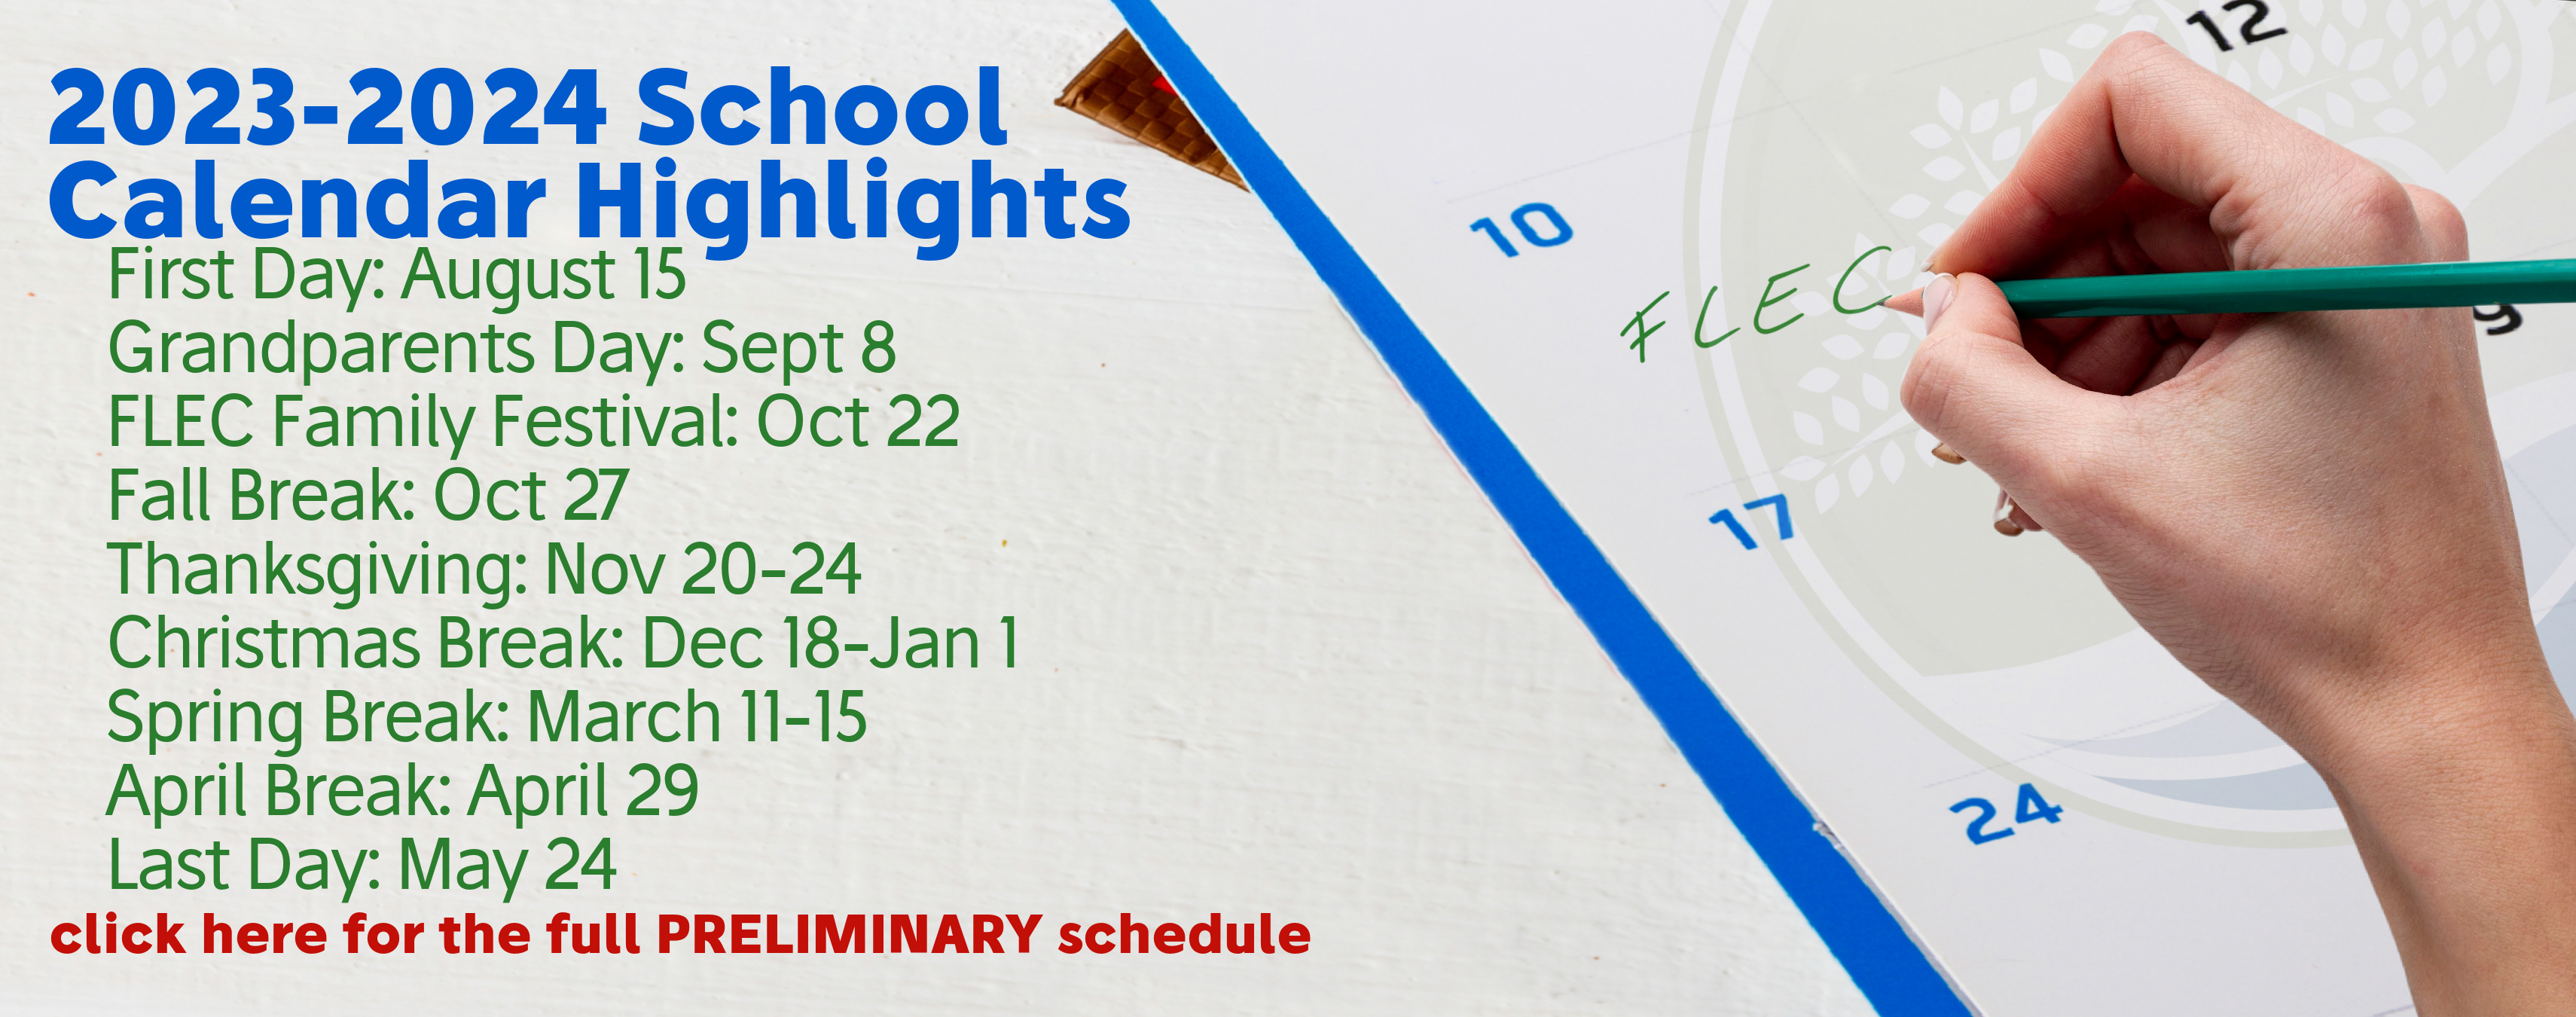 School Calendar Highlight copy (1)